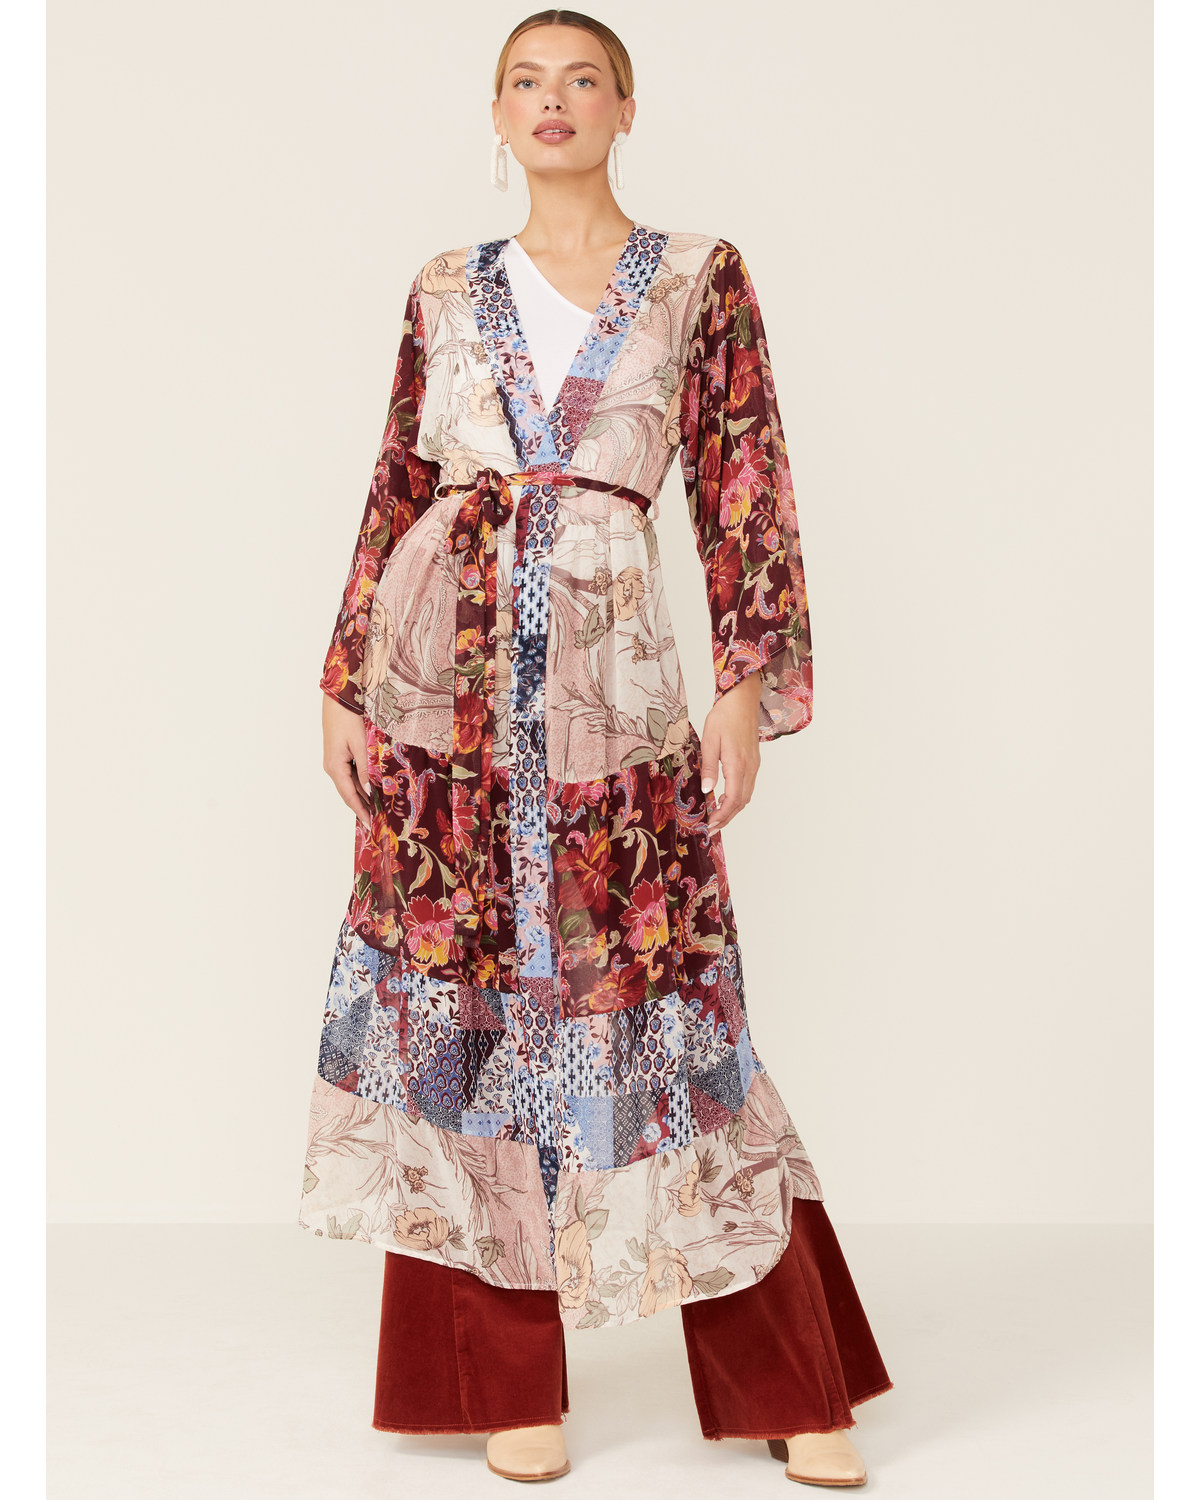 LaBiz Women's Navy & Burgundy Floral Long Kimono